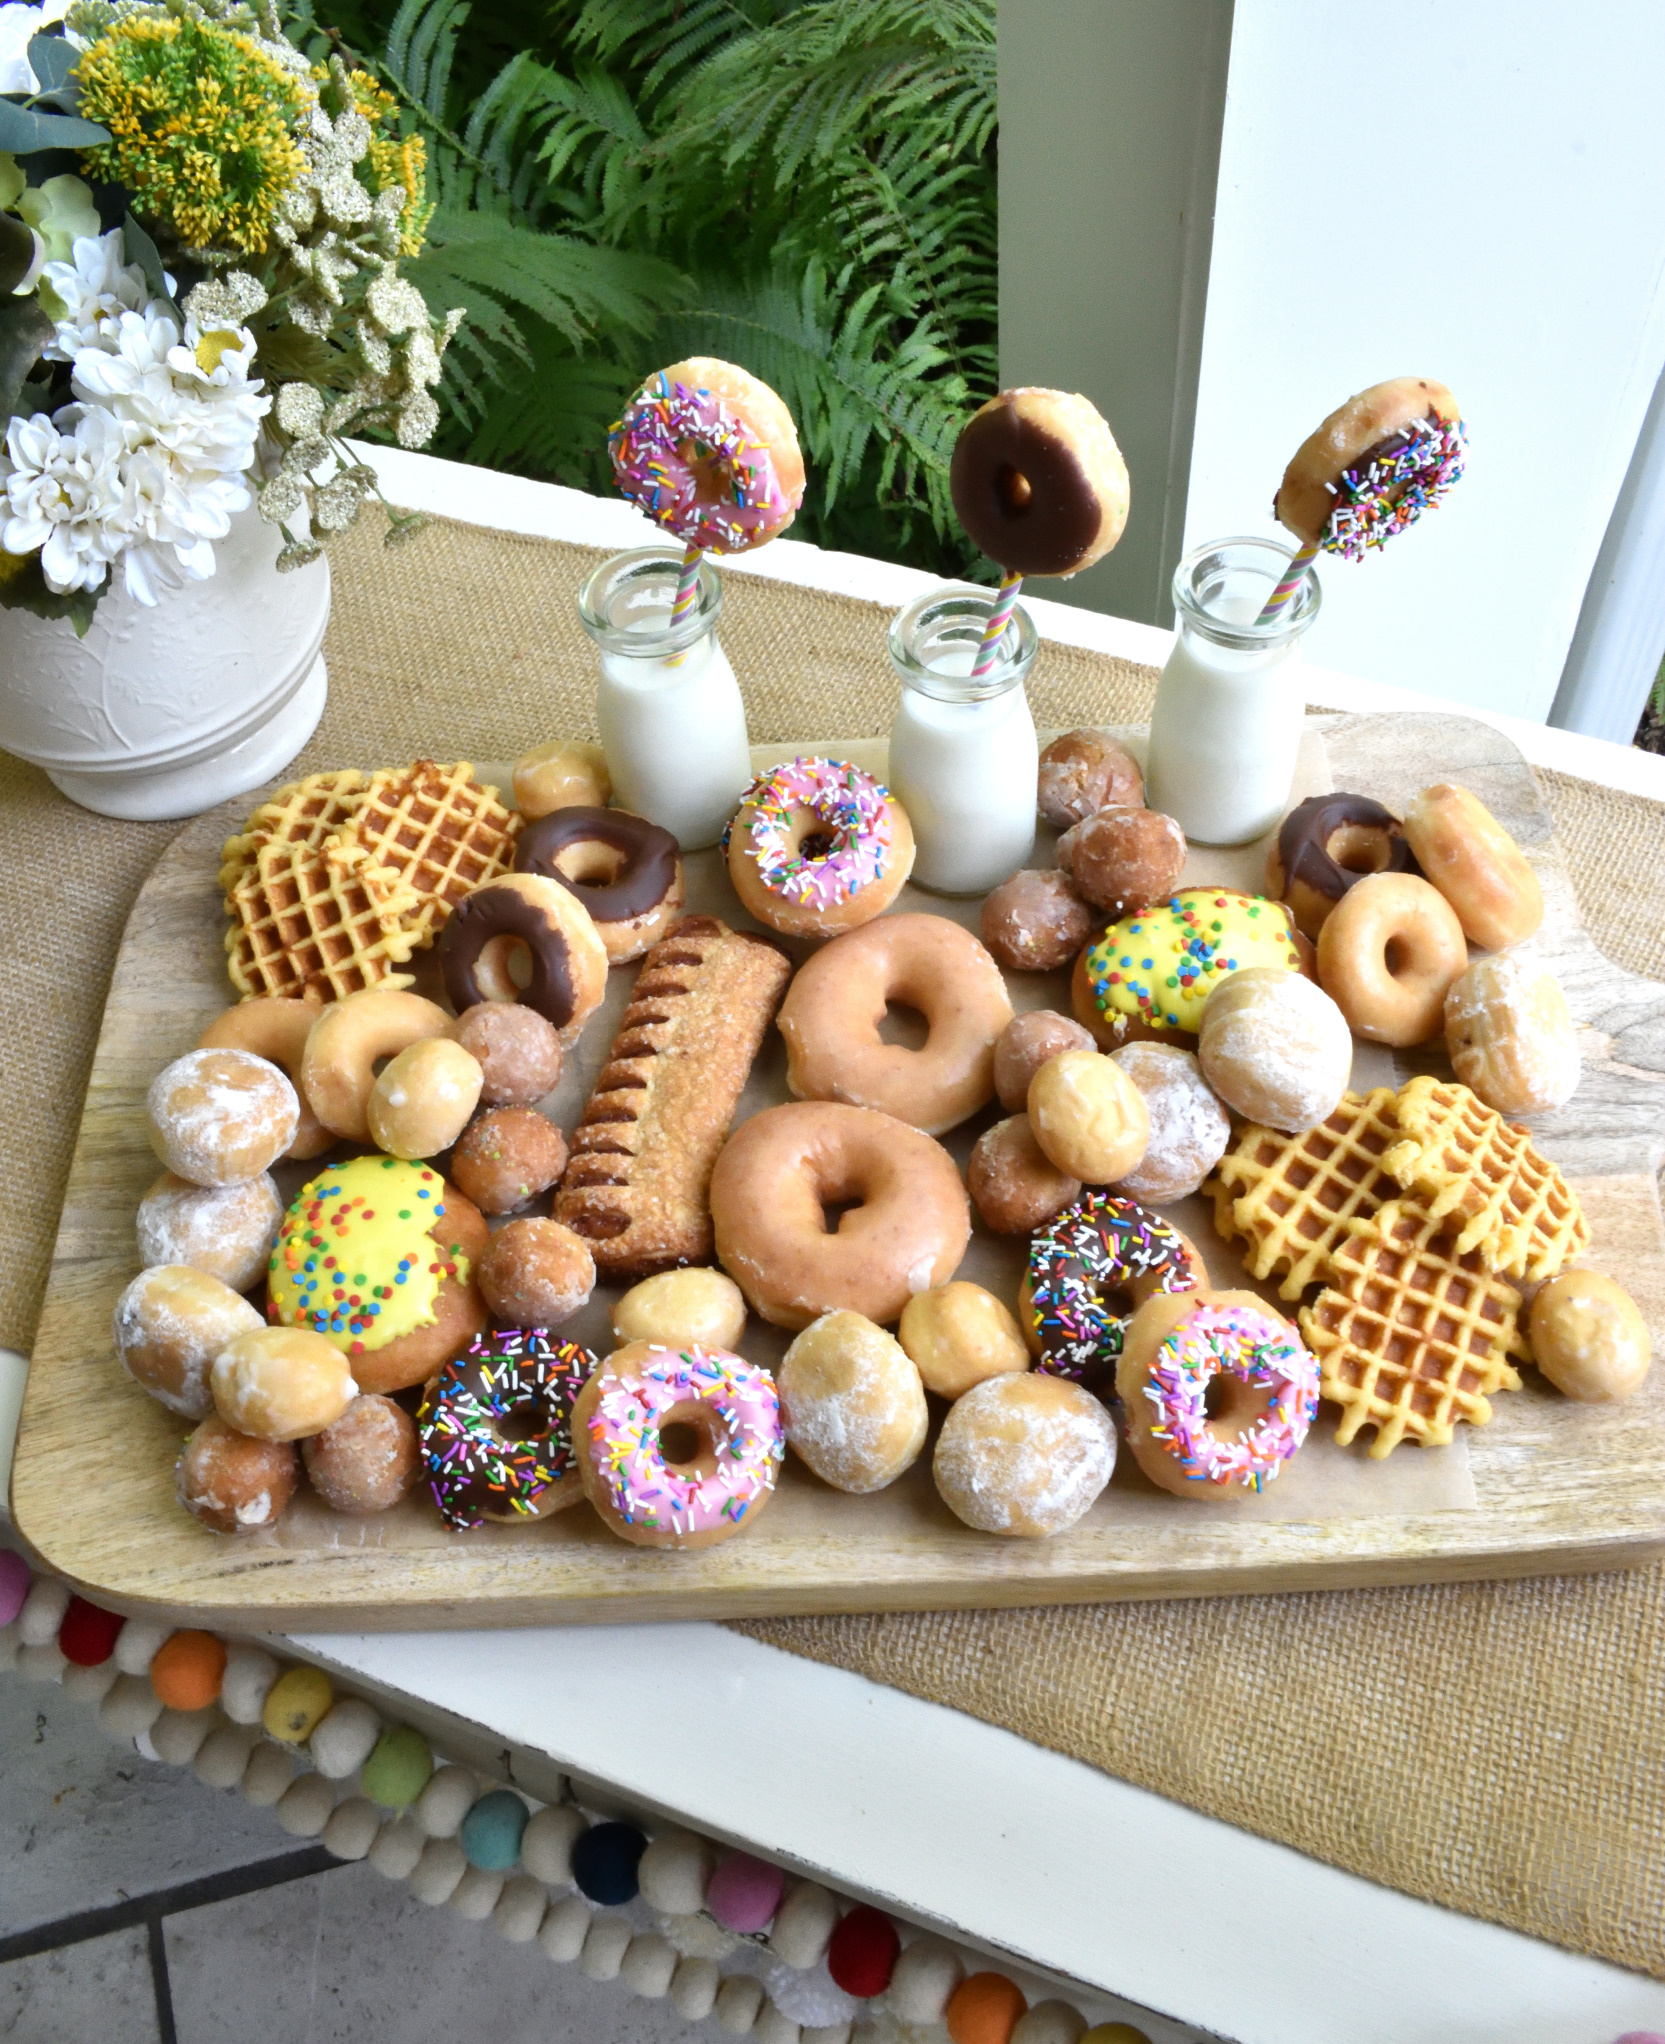 doughnut celebration board